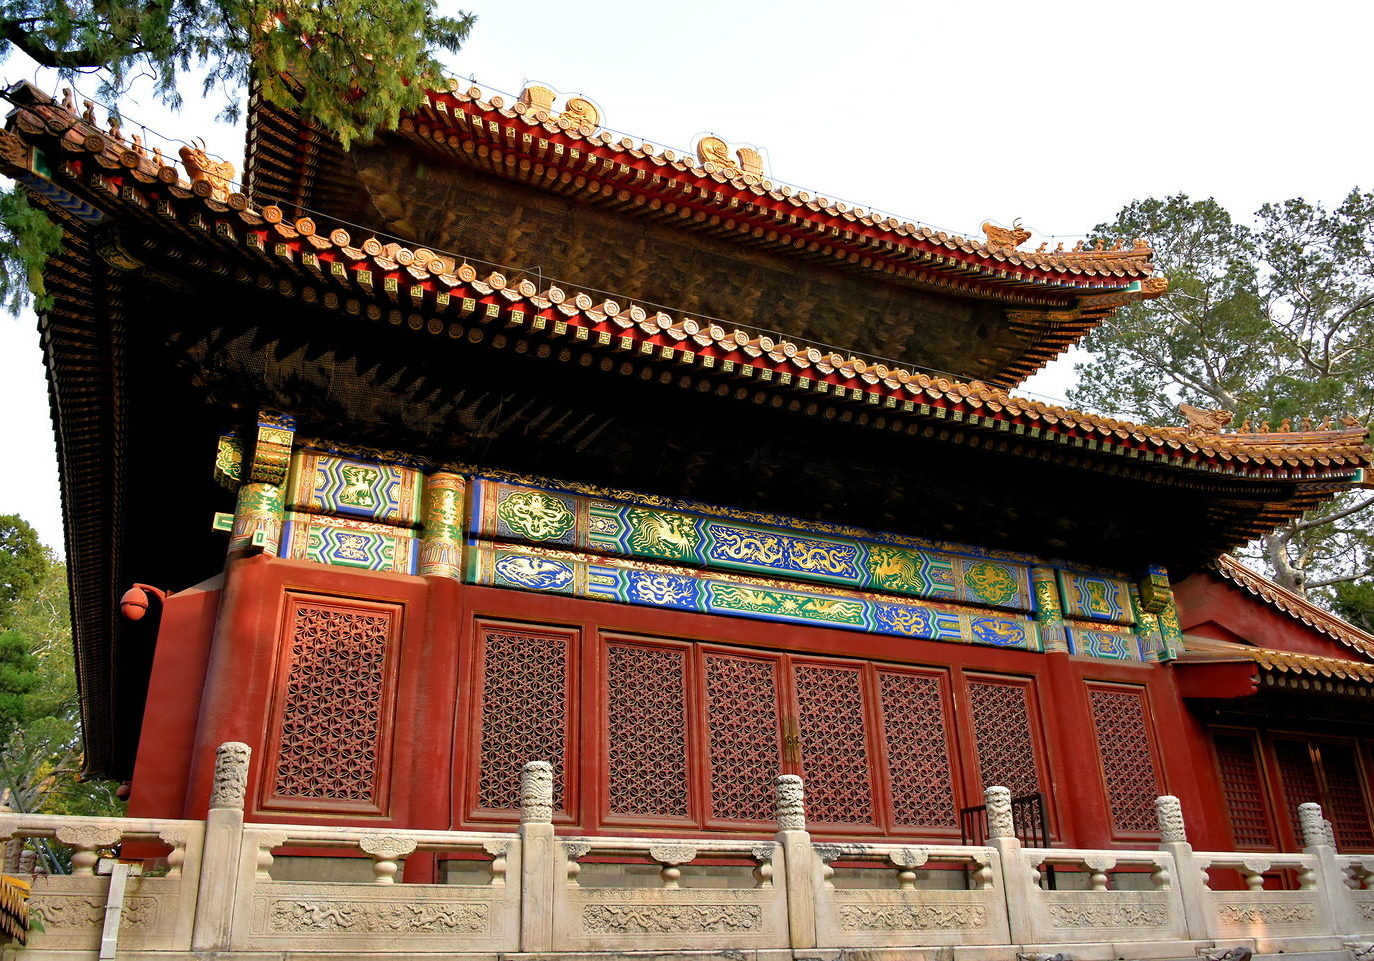 The Forbidden City - China